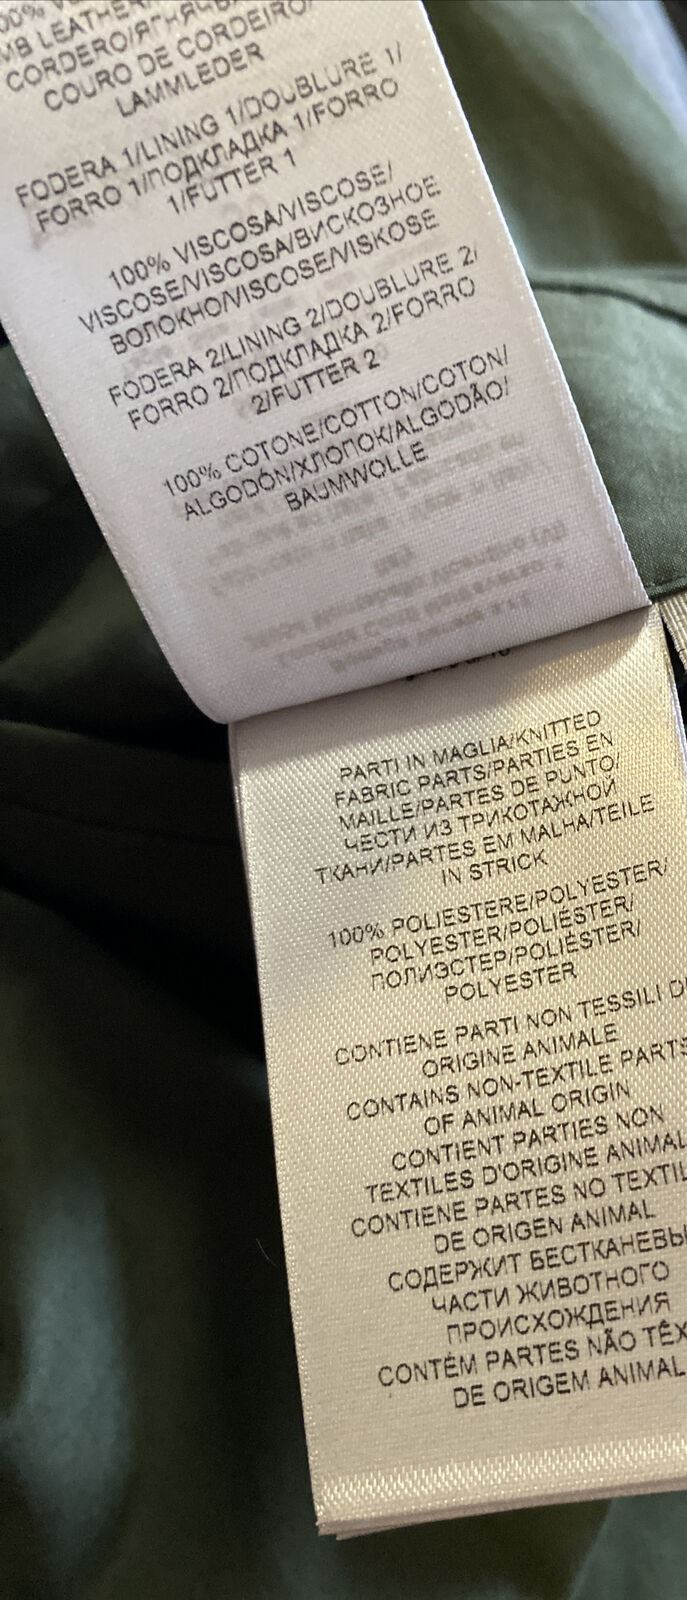 New $4400 Bottega Veneta Mens Suede Jacket Coat DK Gray 46 US ( 56 Eu ) Italy